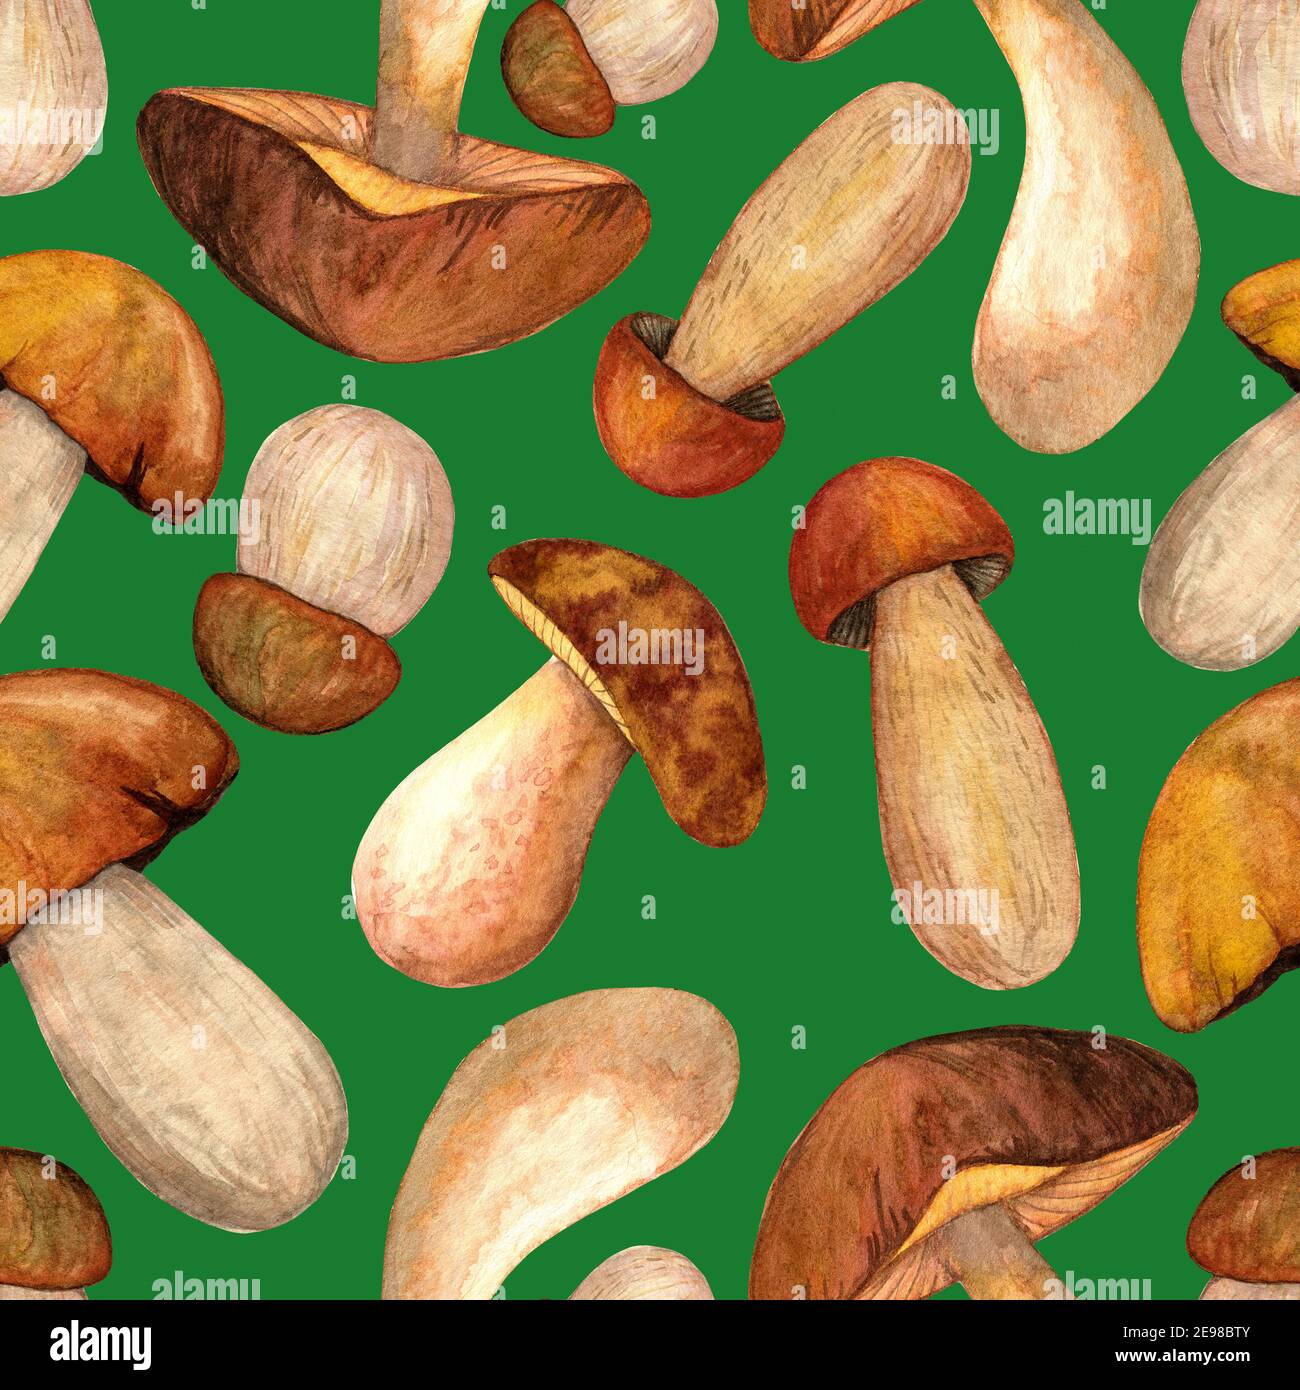 Watercolor boletus mushroom seamless pattern Stock Photo